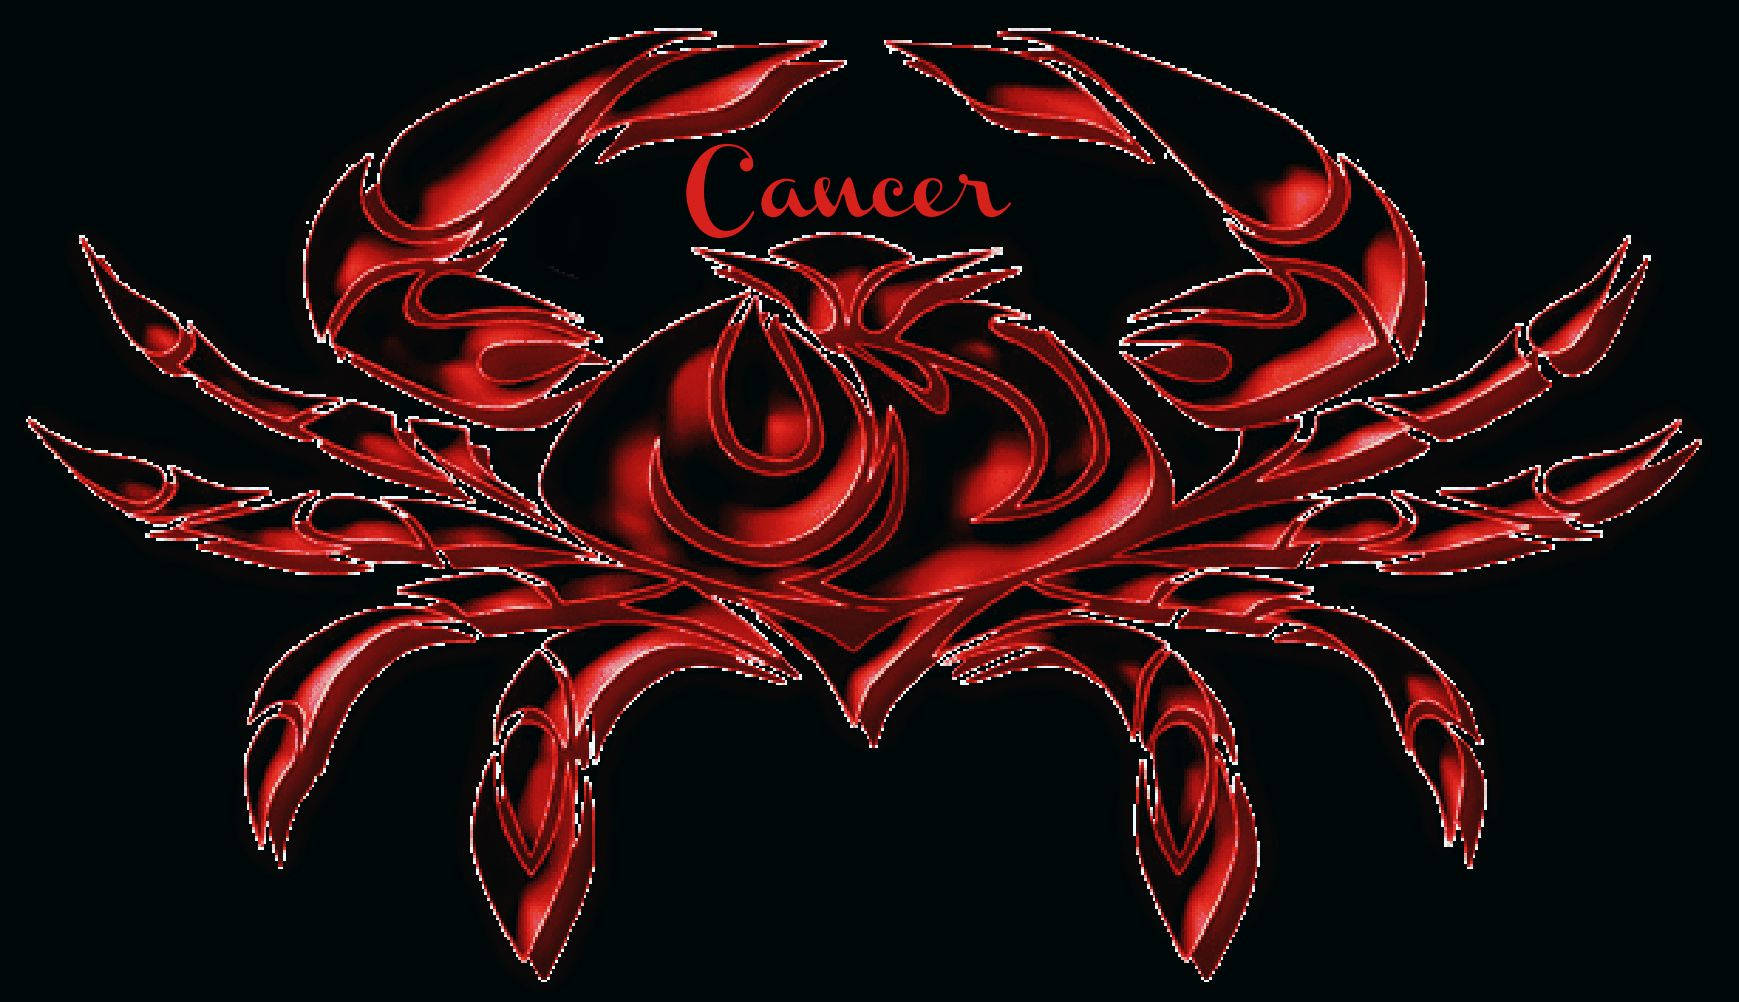 Striking Digital Art Of A Red Cancer Crab Background